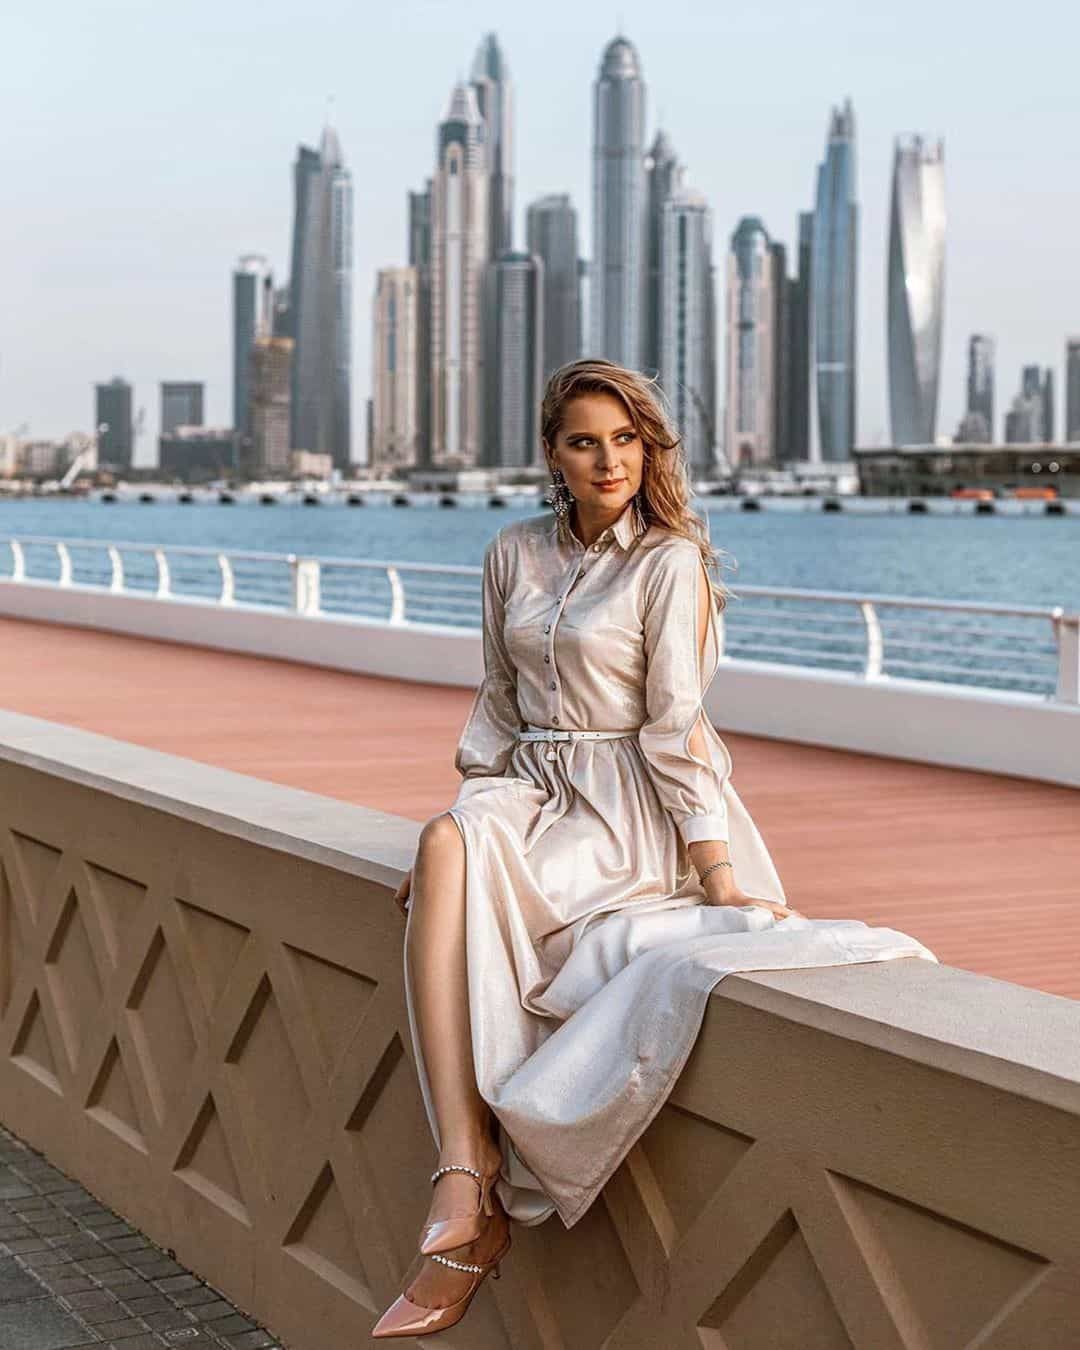 Book Ladies Photoshoot In Dubai. Get Best UAE Photography Experience. Hire Professional Photographer | DubaiContent.Pro